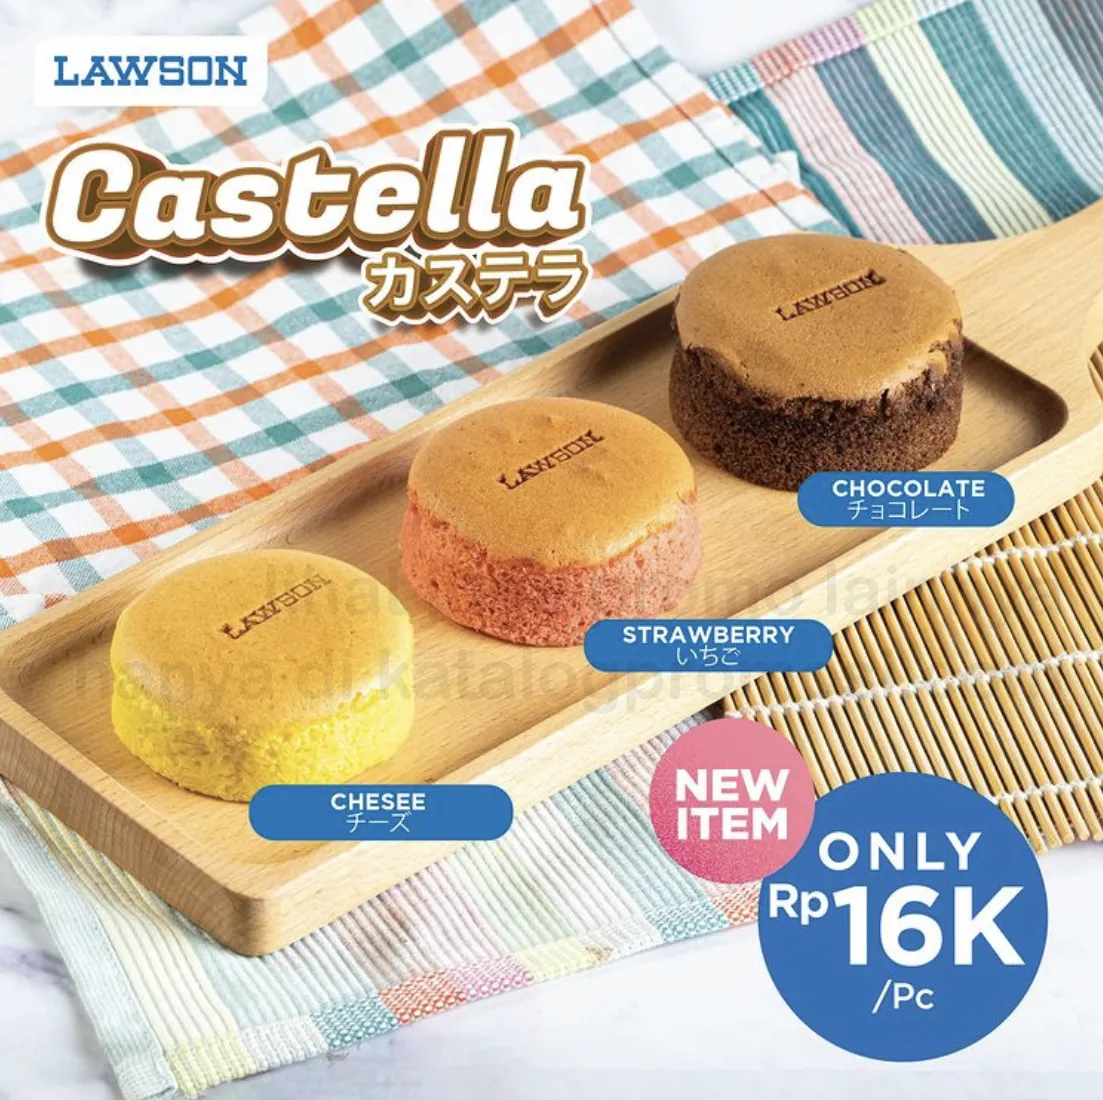 PROMO LAWSON New Dessert - CASTELLA ! harga mulai Rp. 16.000